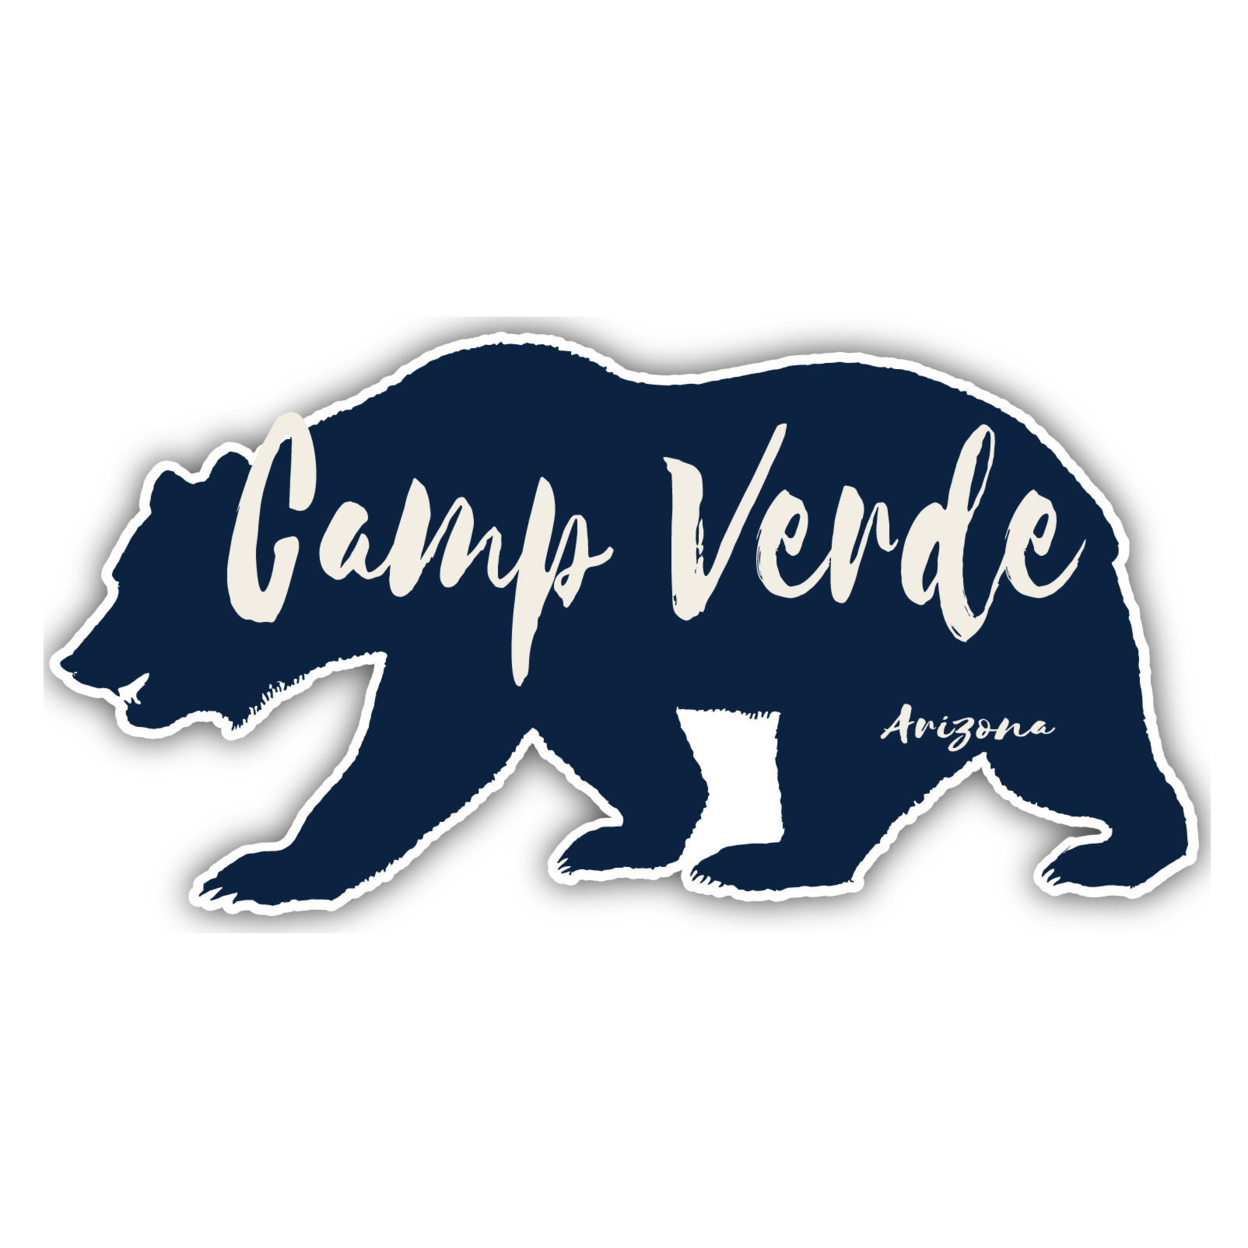 Camp Verde Arizona Souvenir Decorative Stickers (Choose Theme And Size) - 4-Pack, 10-Inch, Tent